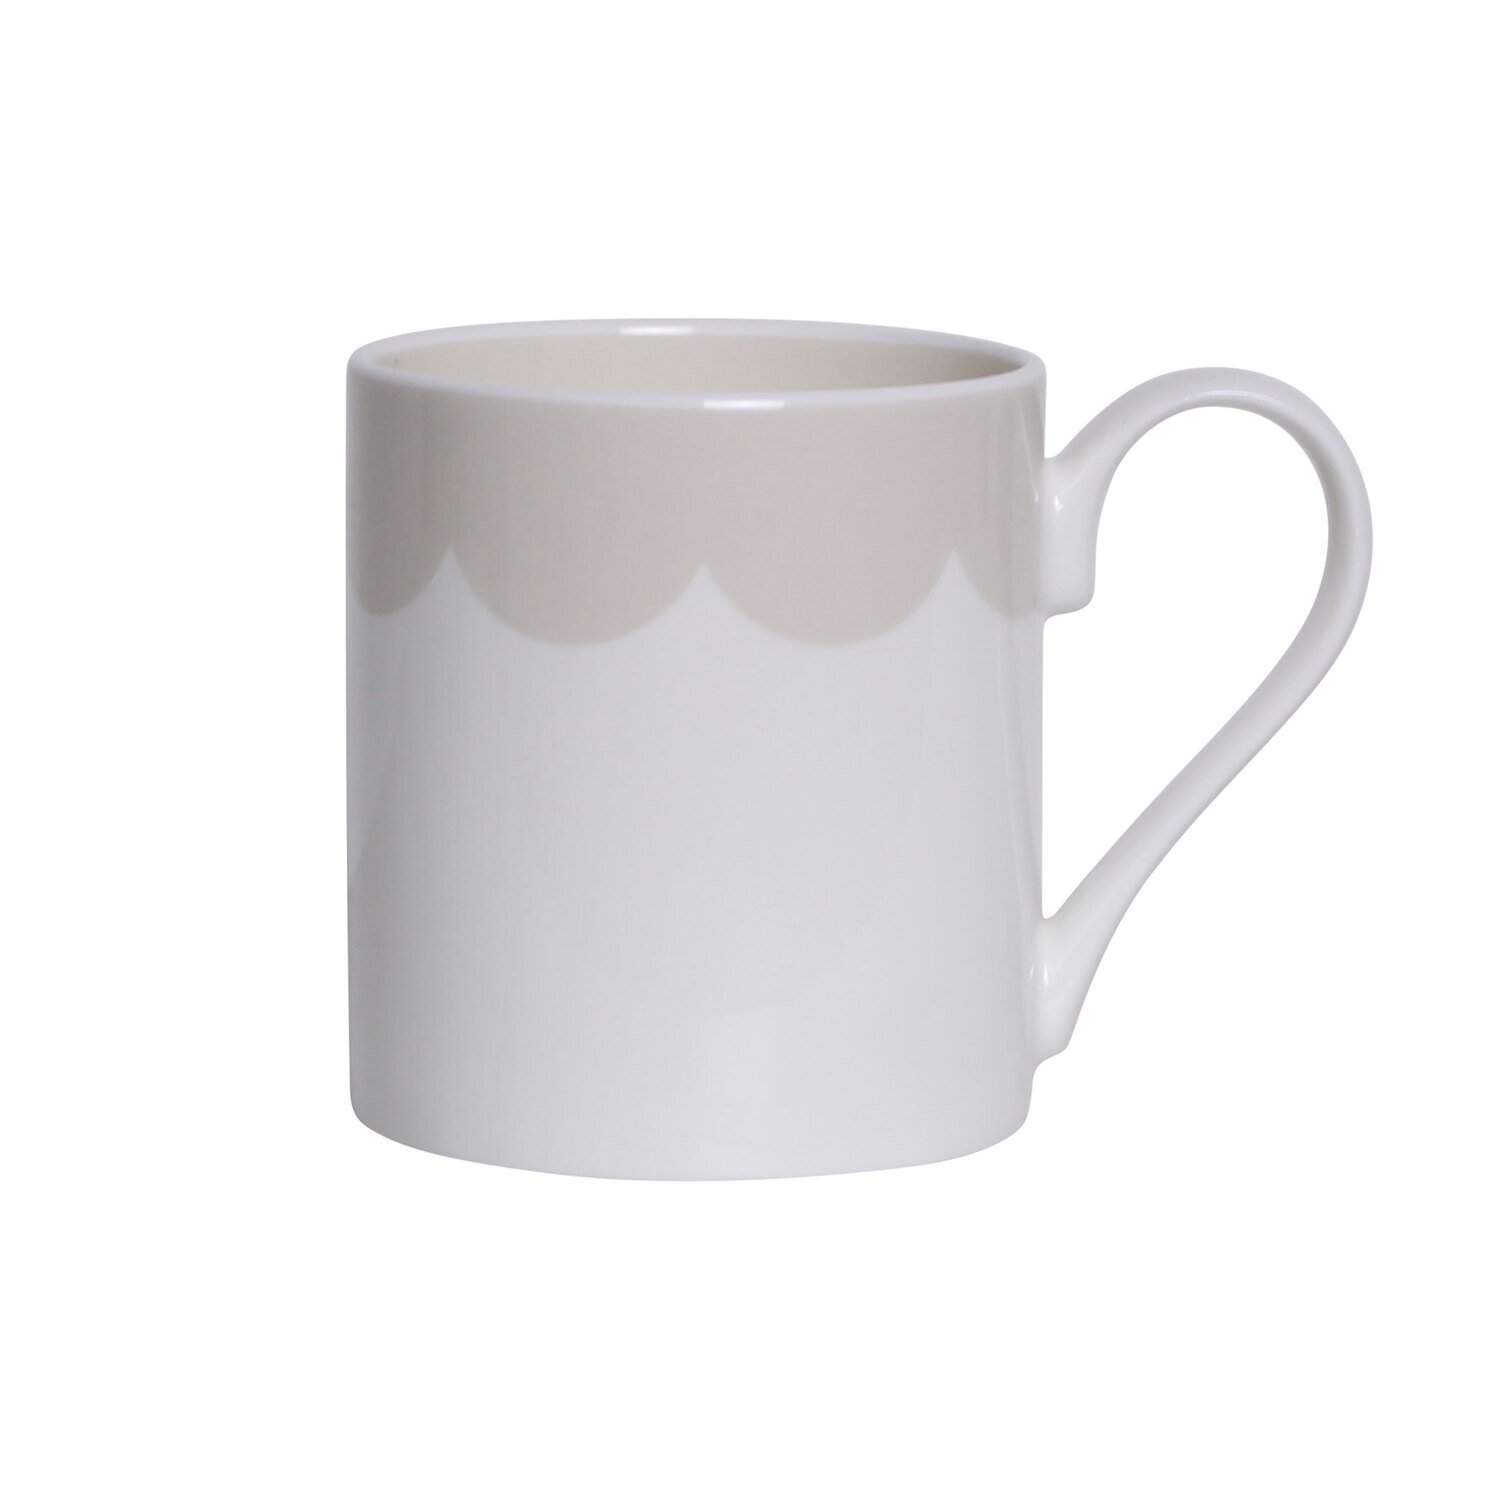 Addison Ross Cappuccino Scallop Fine China Mug 3 x 3.5 Inch Ceramic MUG011